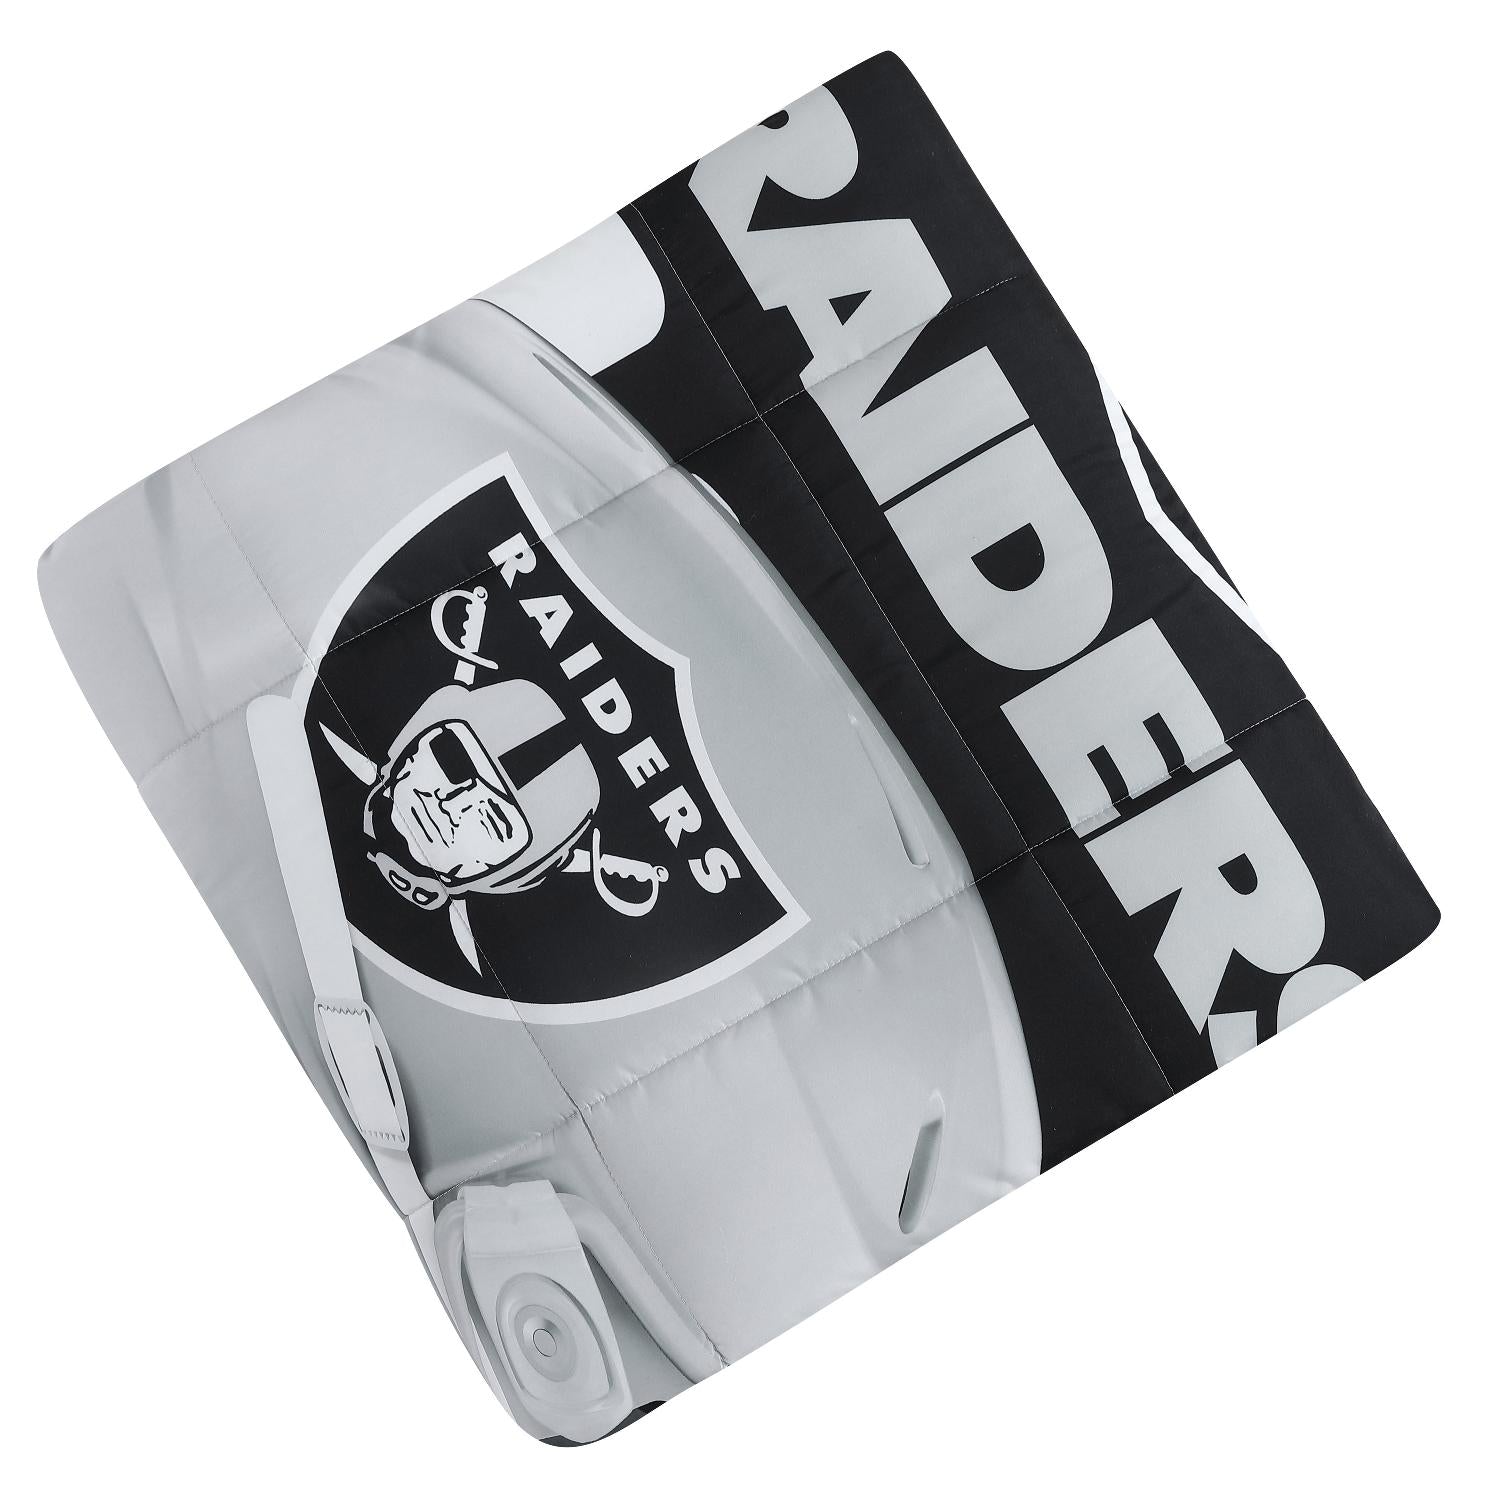 Las Vegas Raiders NFL Officially Licensed 3-Piece Comforter Set - Comforter